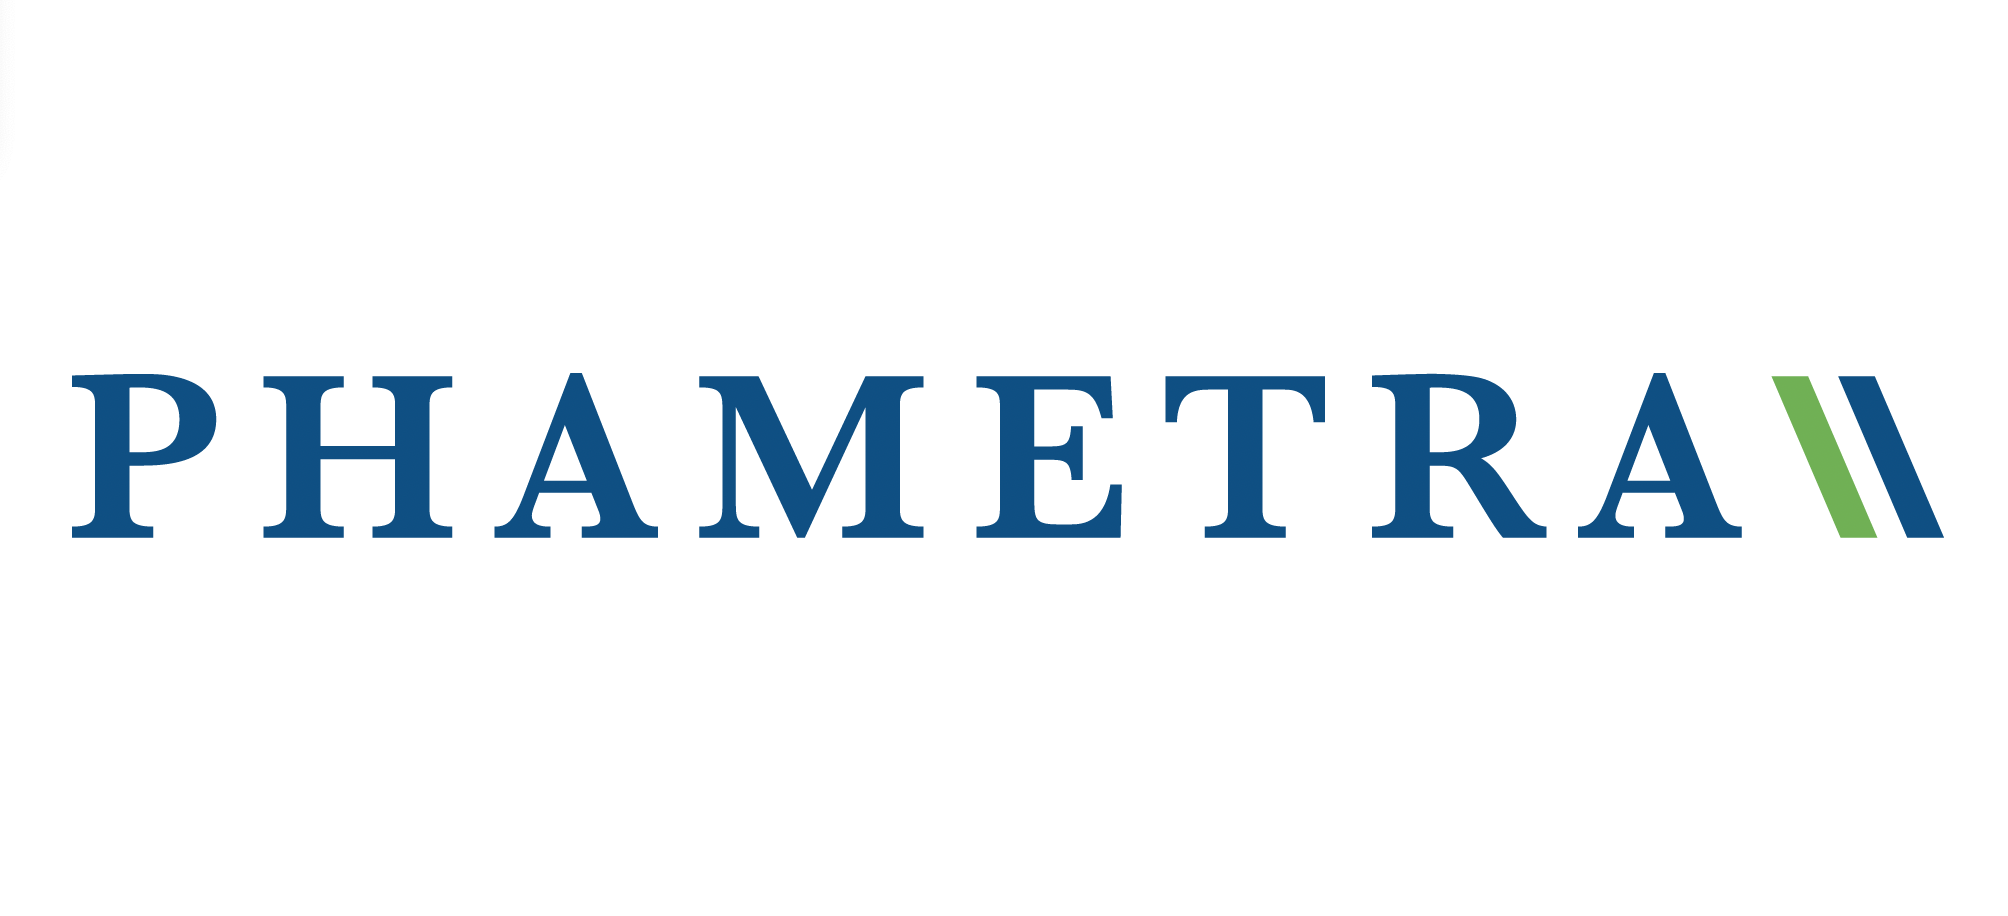 Phametra Pharma und Medica Trading GmbH